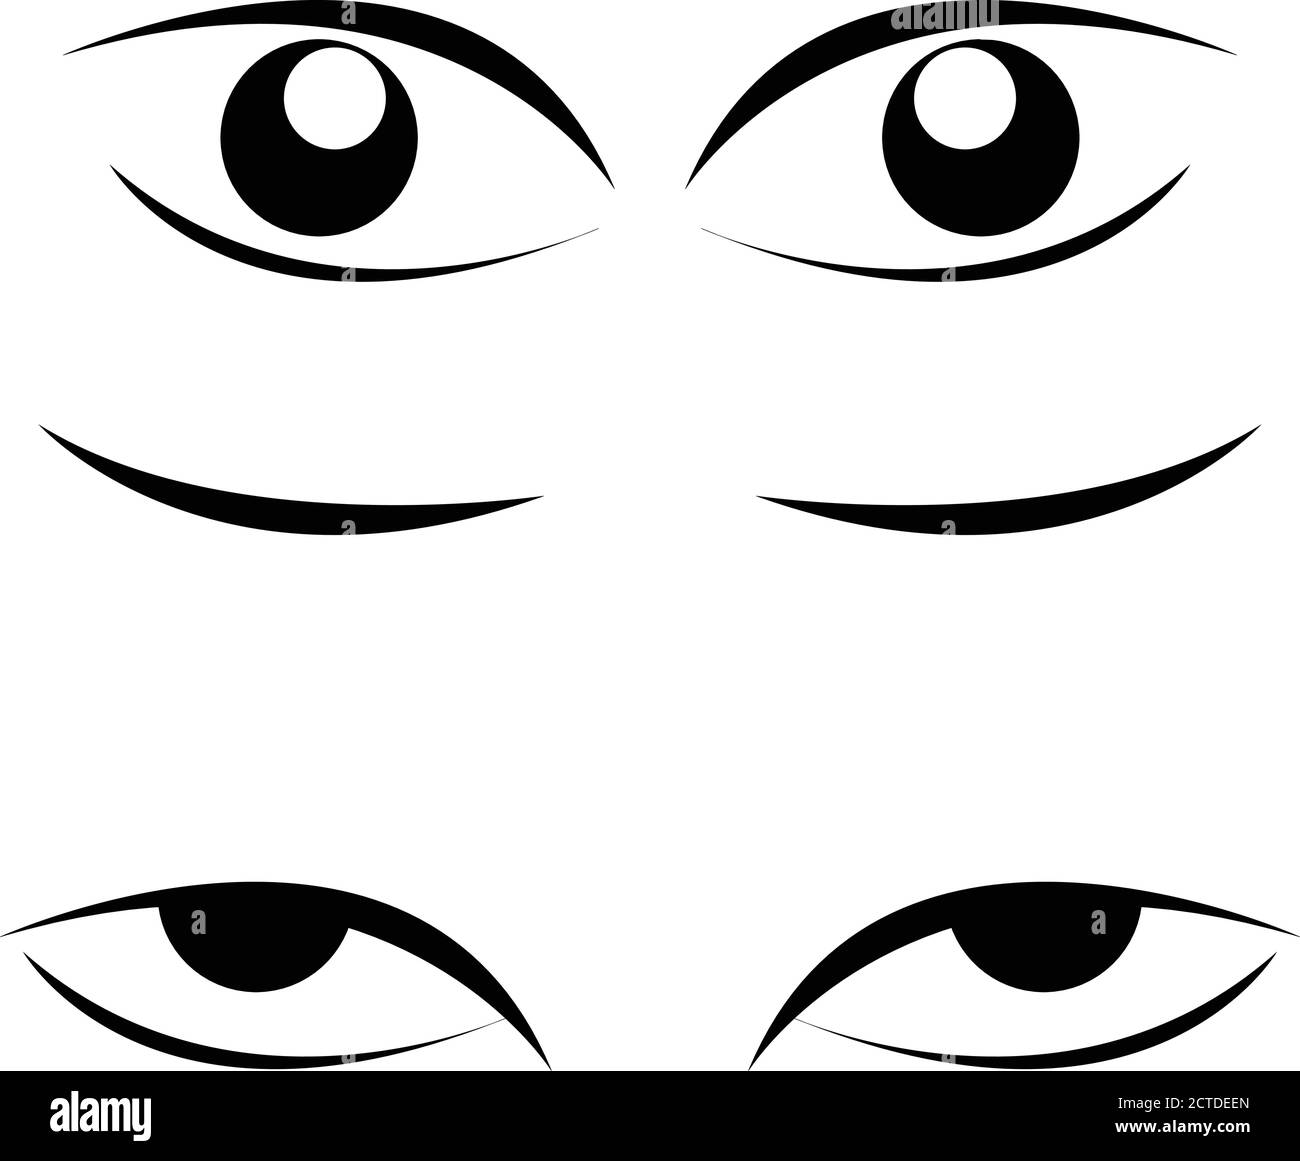 Cartoon eyes Black and White Stock Photos & Images - Alamy